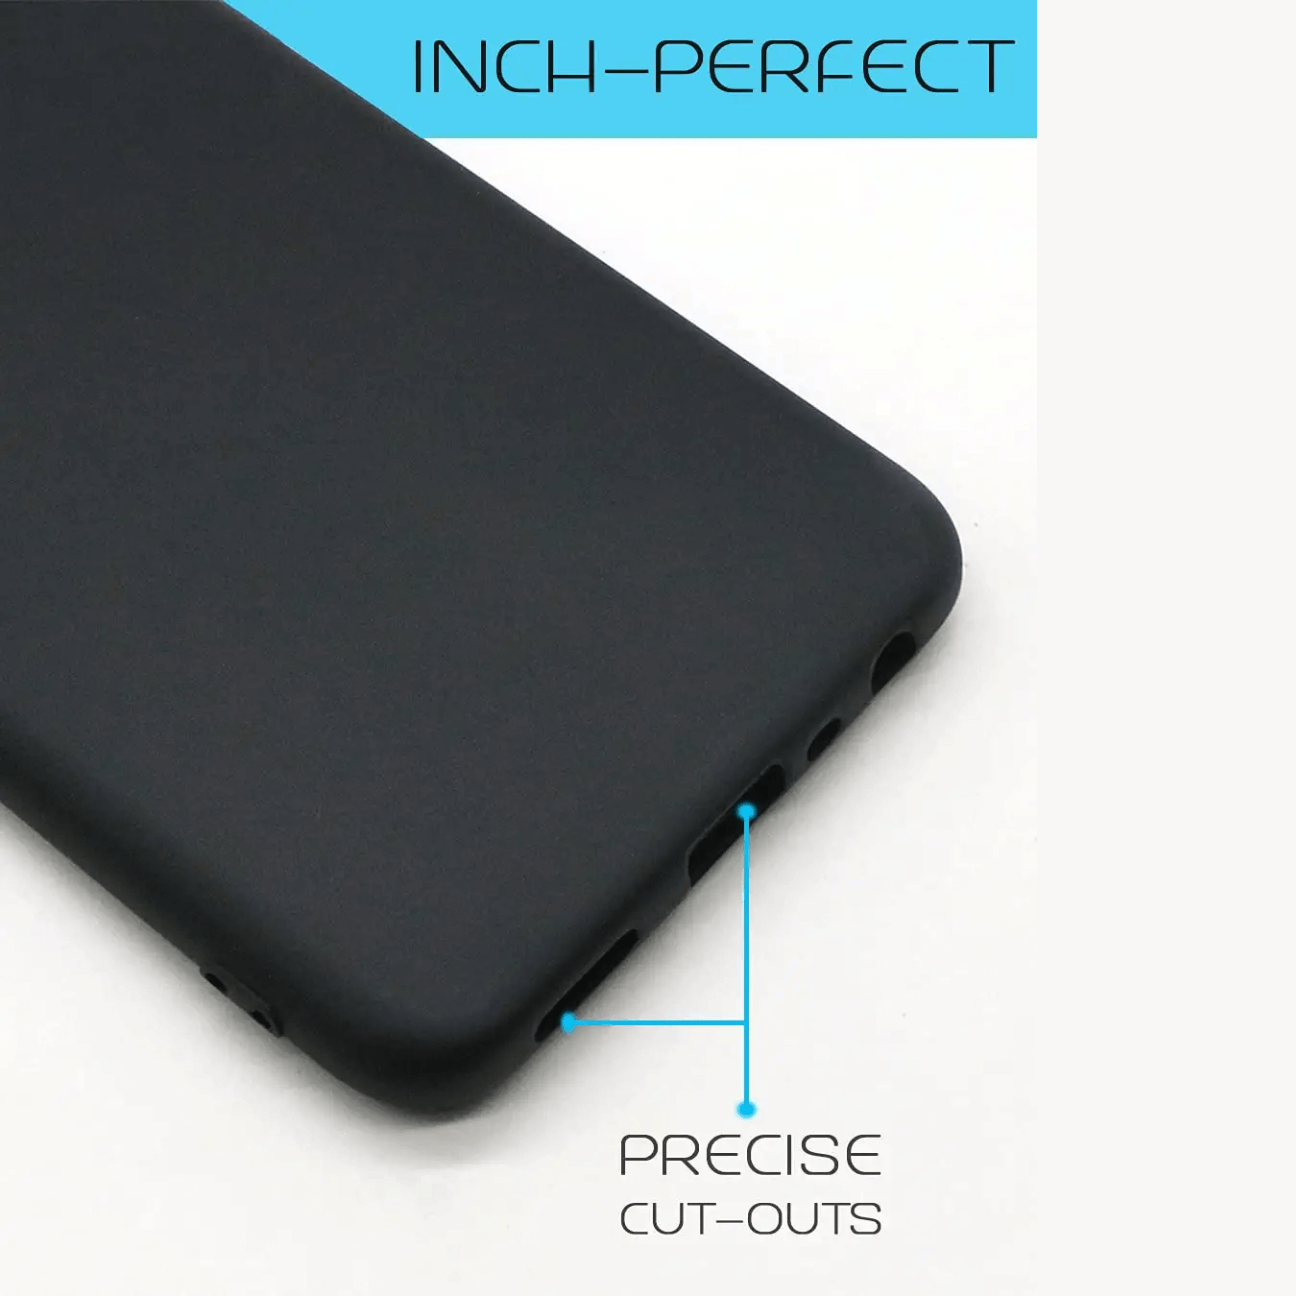 Vivo V20 (2020) Black Soft Silicone Phone Case Image